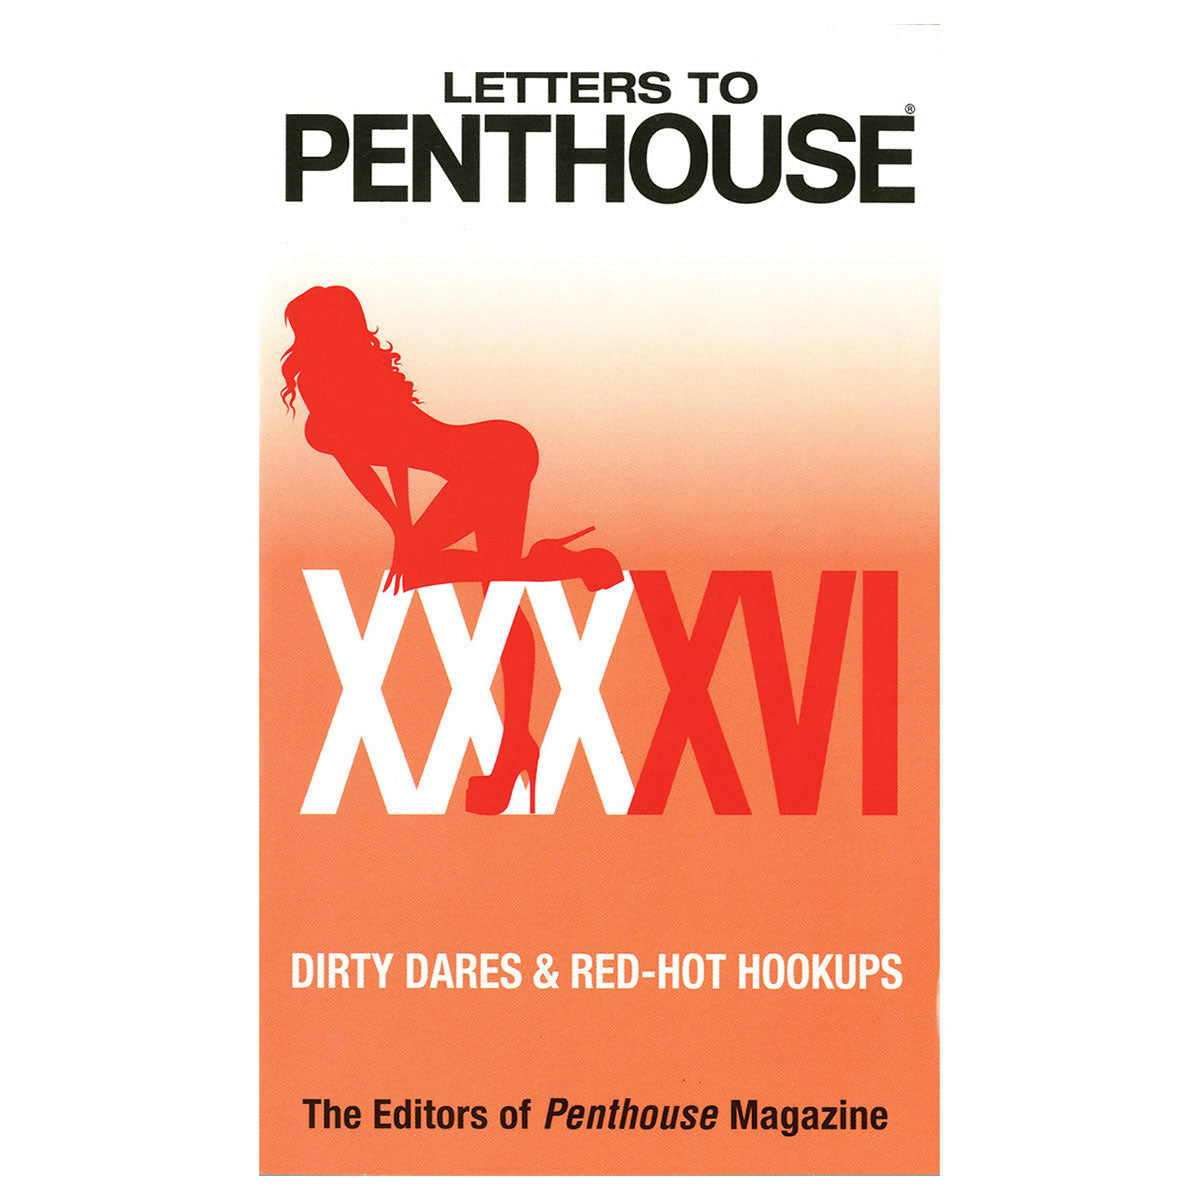 Letters to Penthouse XXXXVI